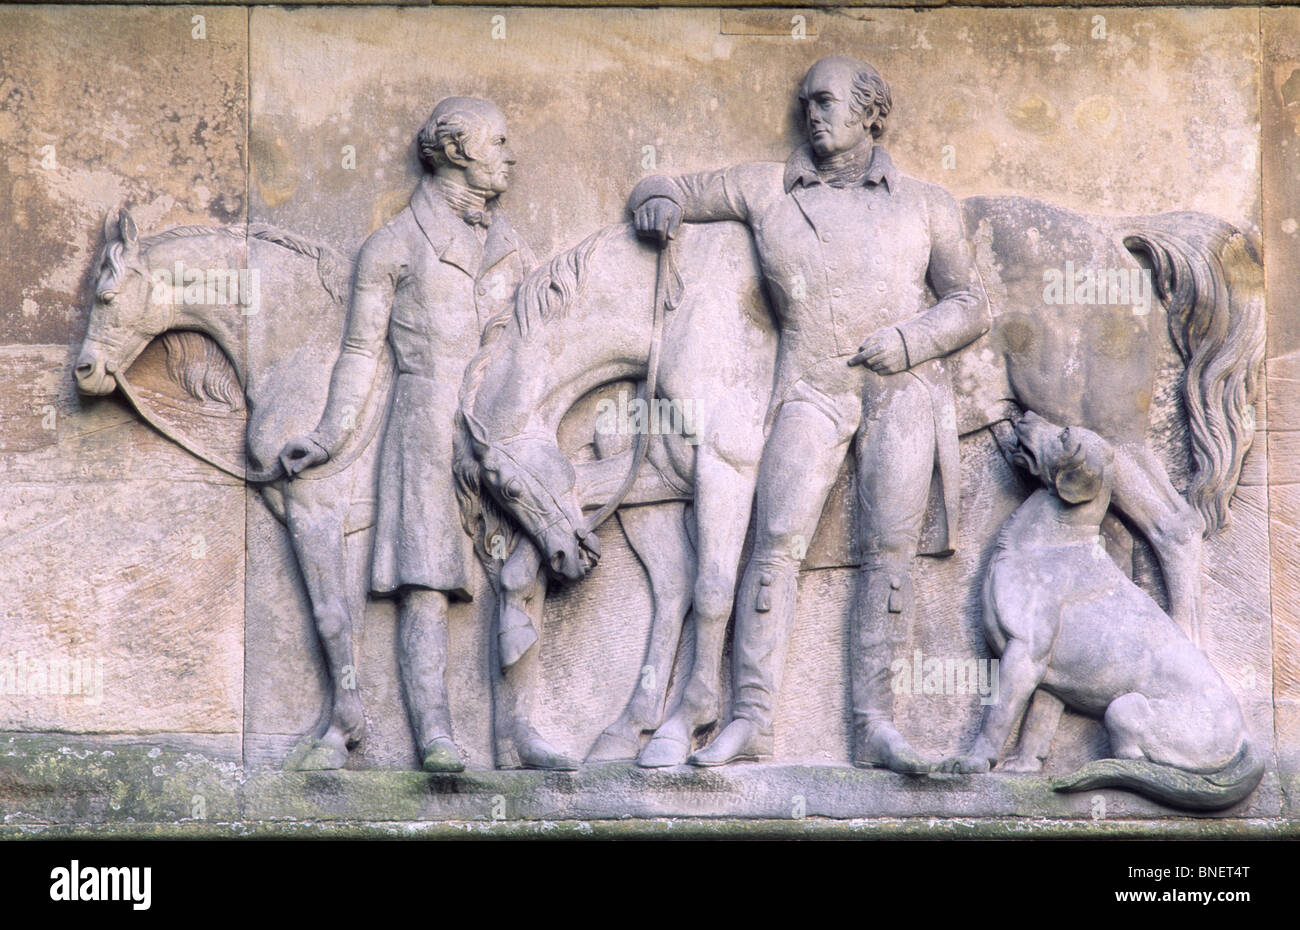 Leicester monumento Coke di Norfolk dettaglio dal bassorilievo Holkham Hall Park Norfolk Inghilterra scultura in pietra agricola Foto Stock